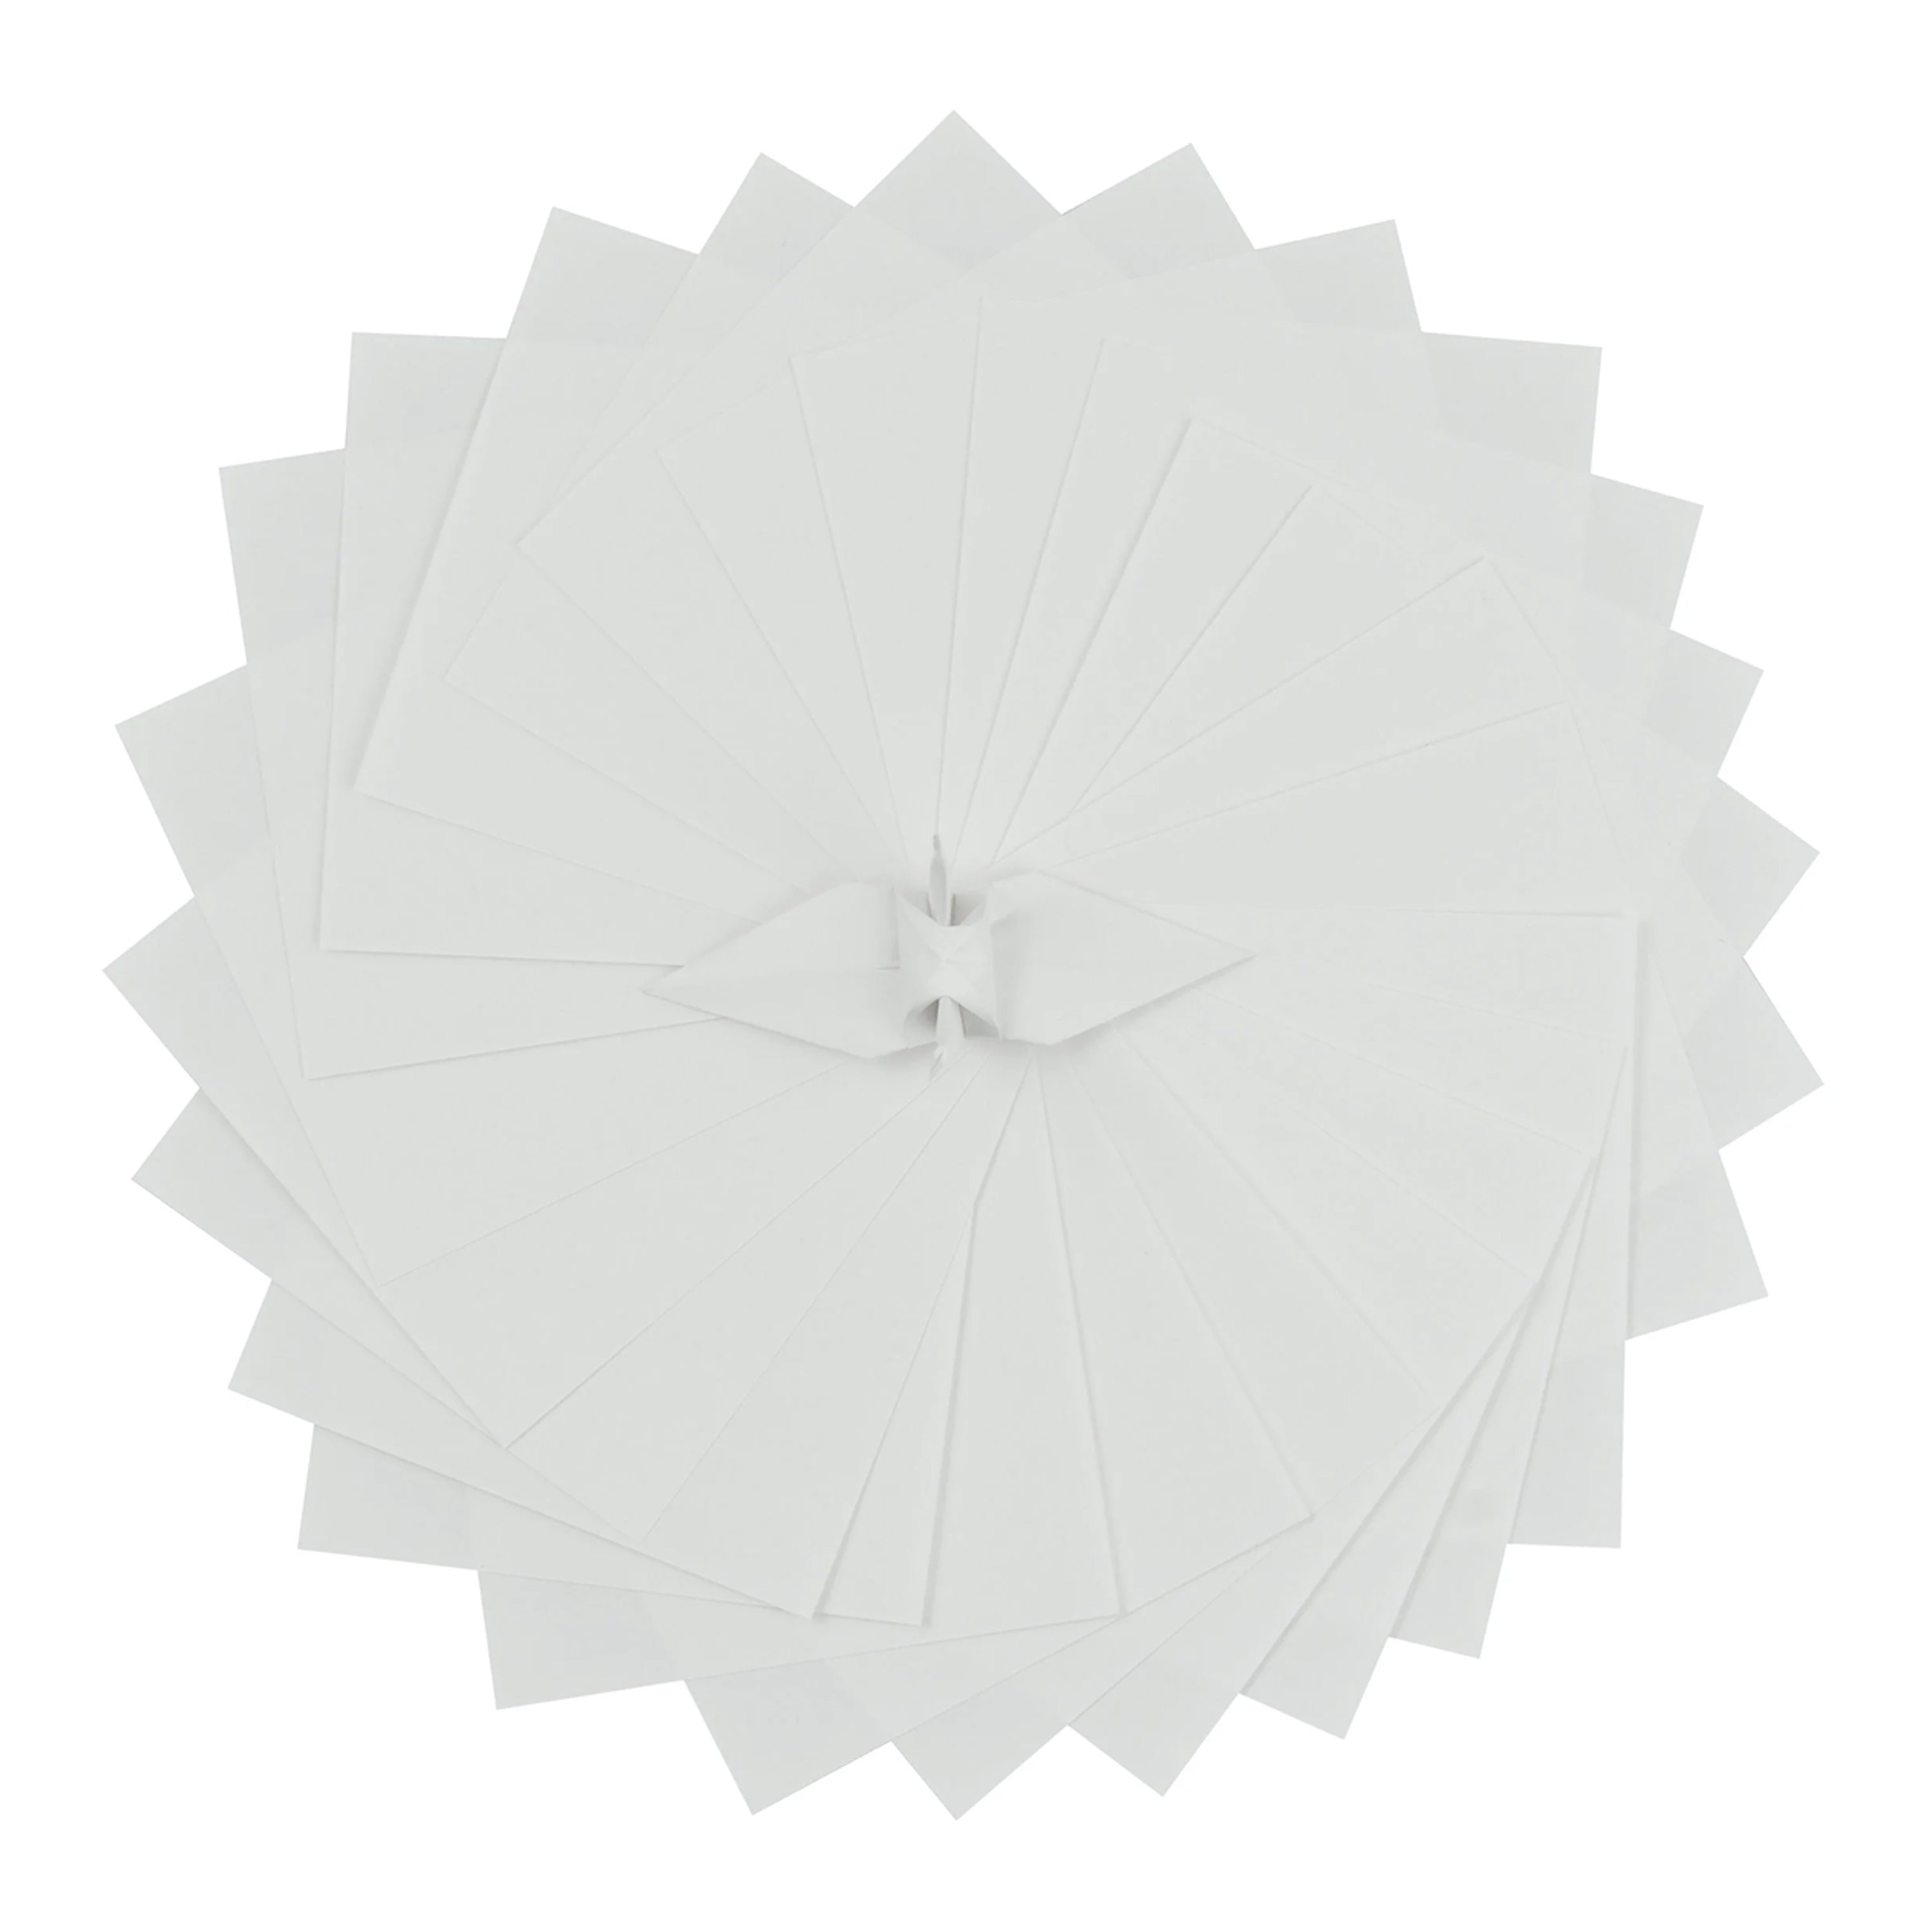 100 fogli di carta origami avorio - 3x3 pollici - confezione quadrata di carta per piegare, gru di carta origami, decorazione origami